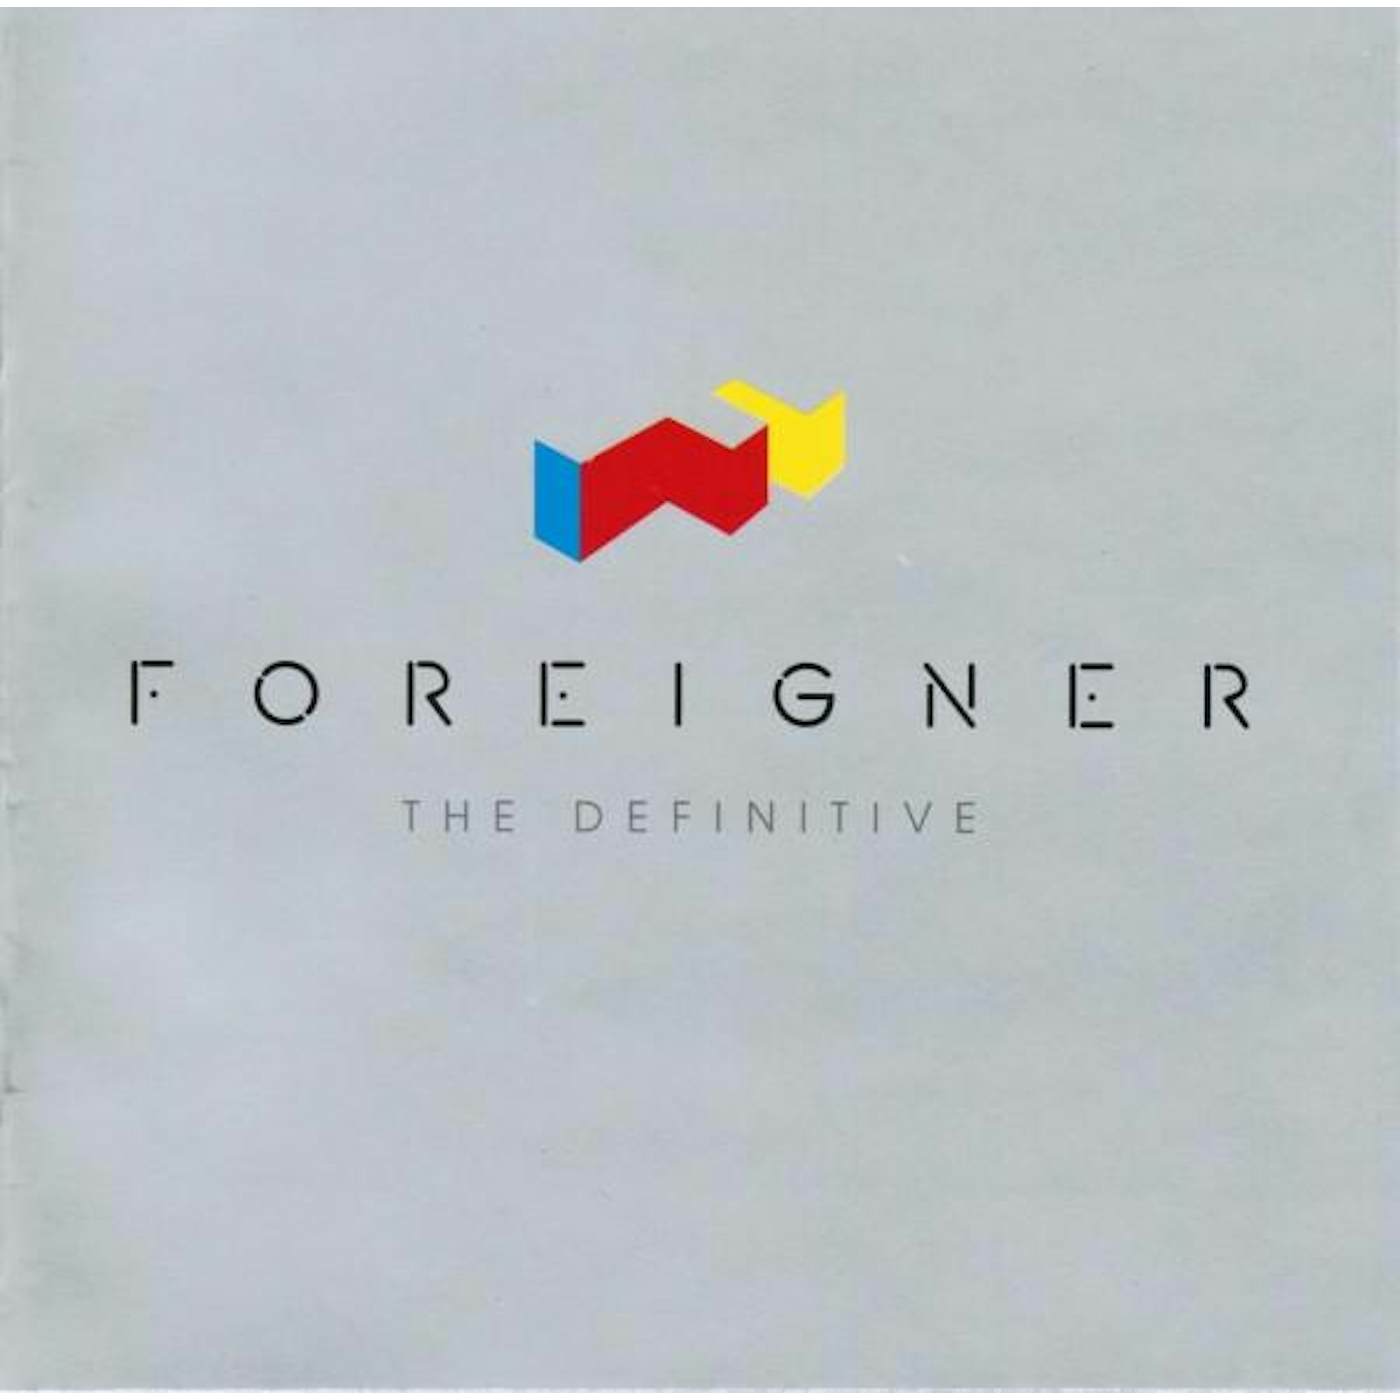 Foreigner DEFINITIVE CD